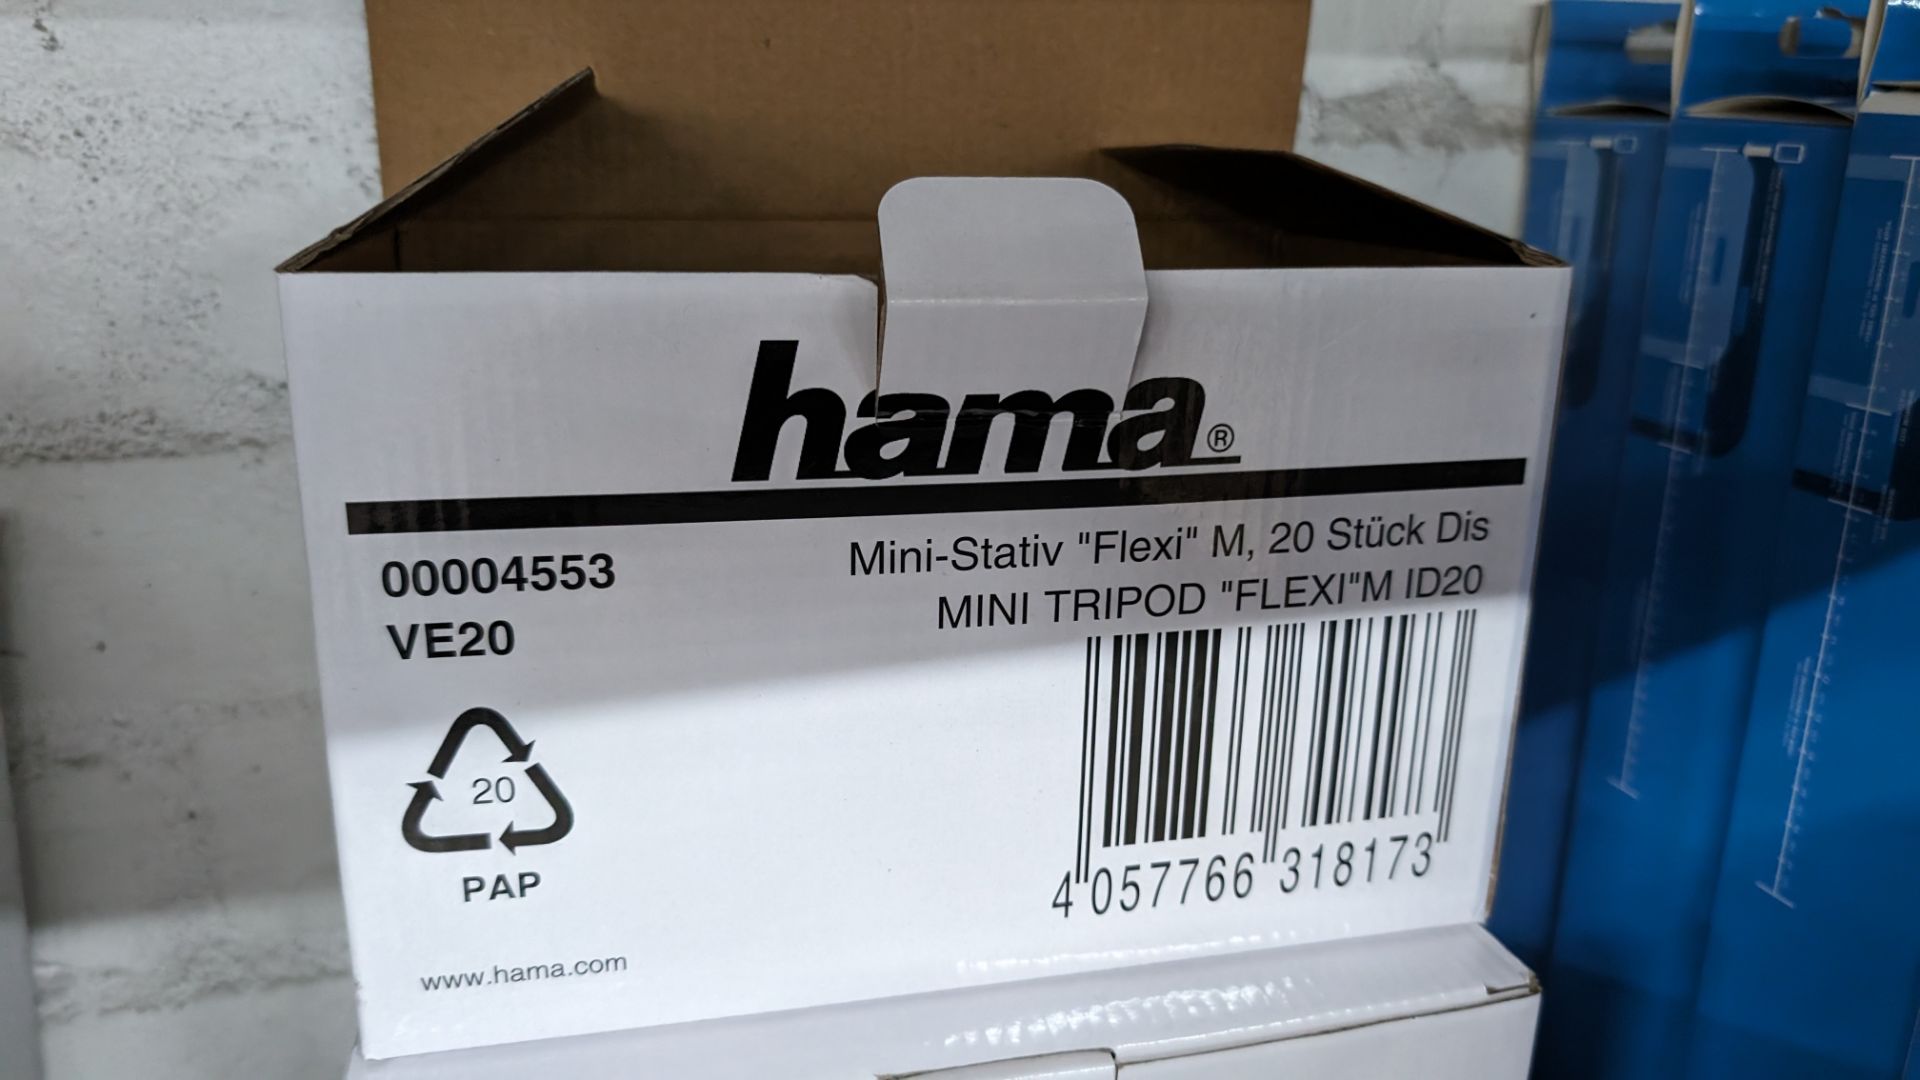 20 off Hama Flexi M mini tripods, in retail display case - Image 3 of 5